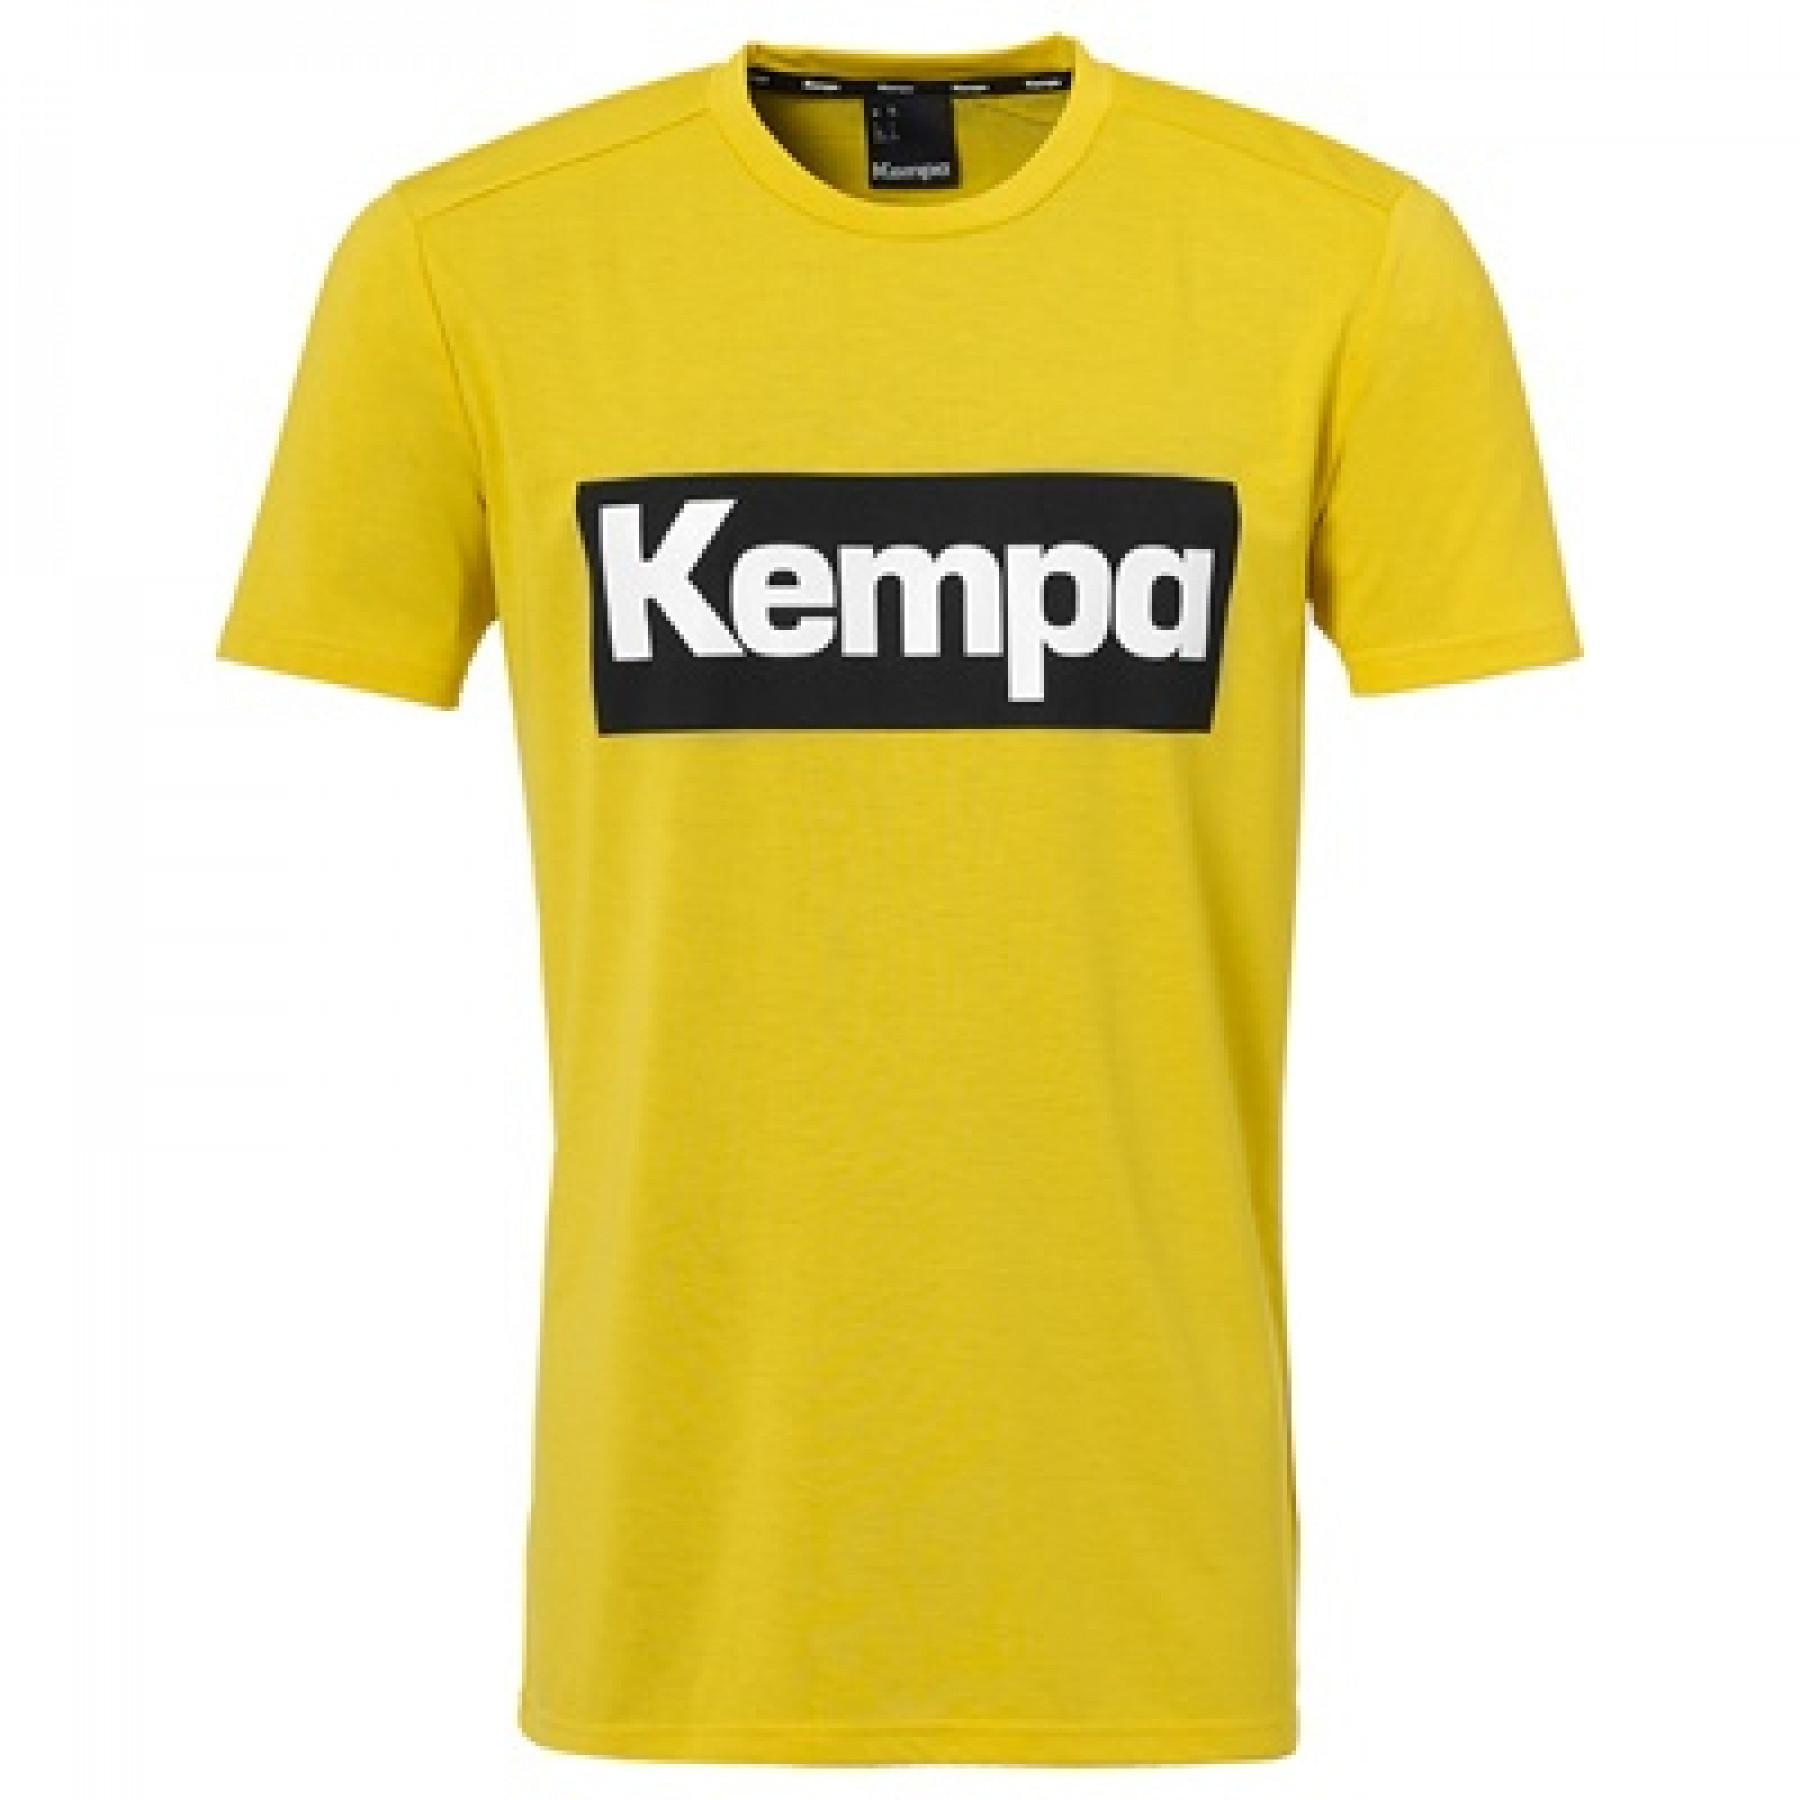 Camiseta Kempa Laganda